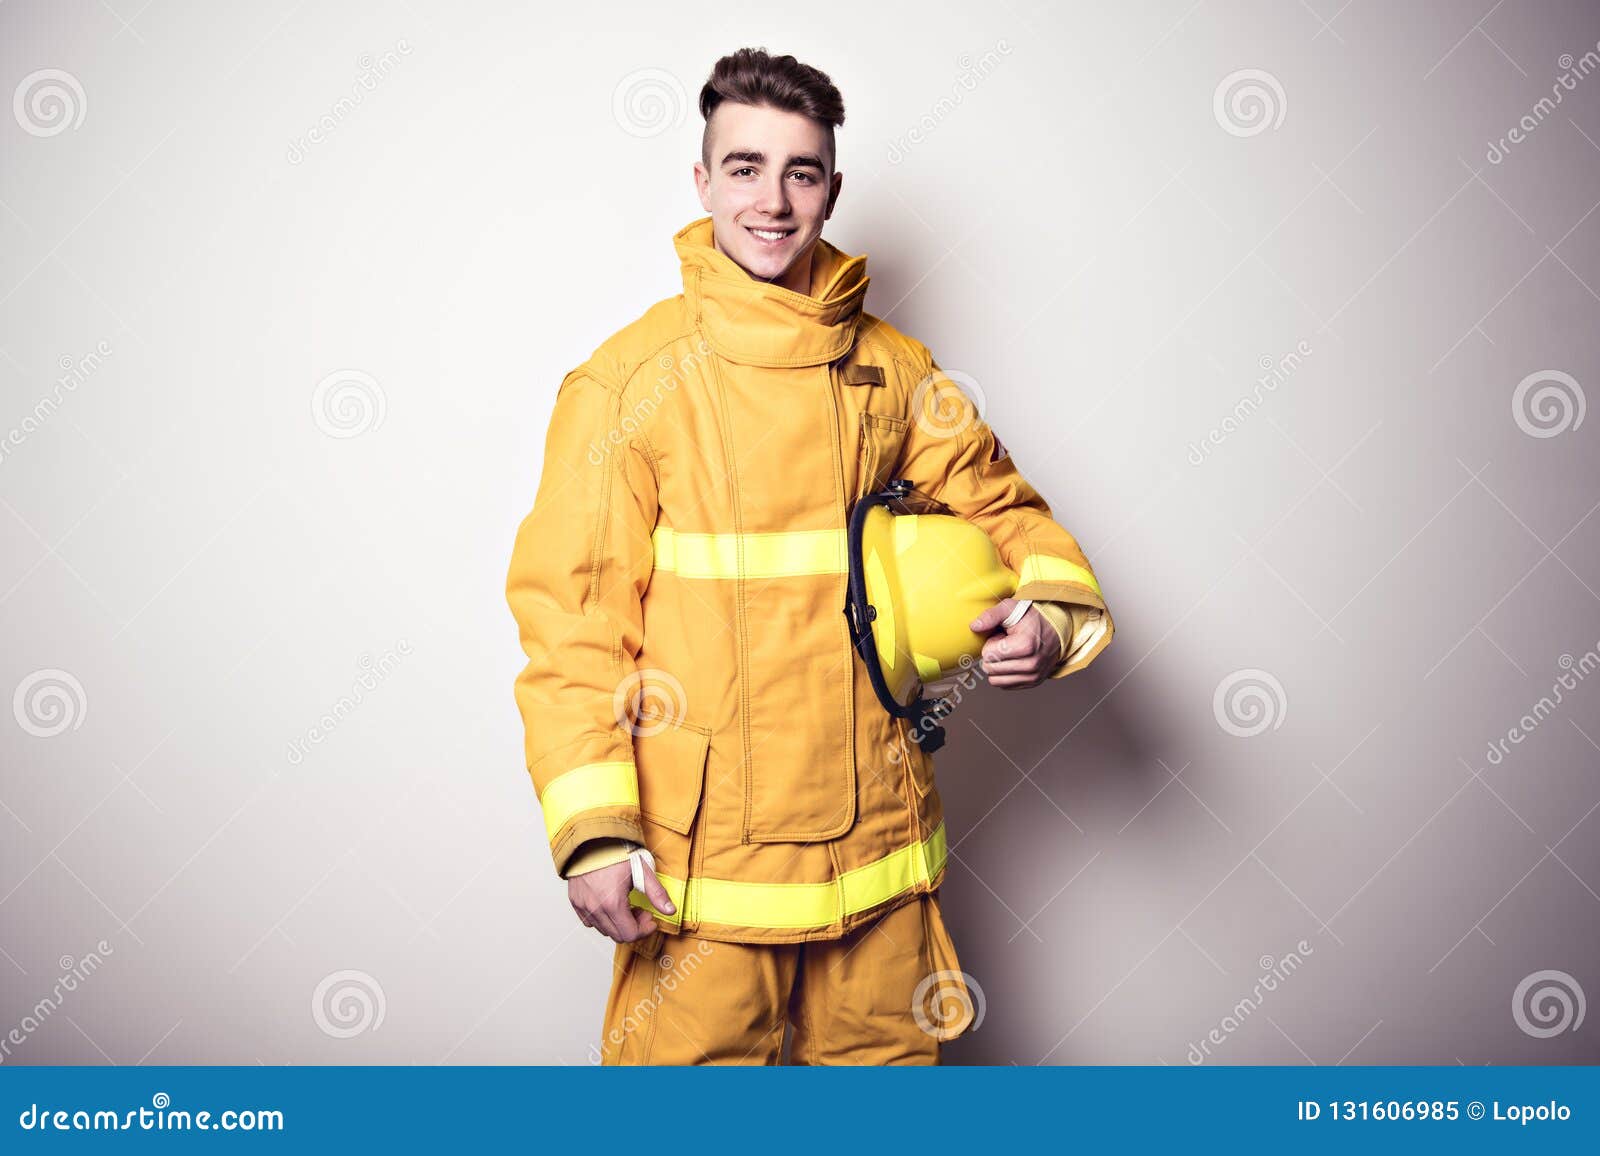 Teen fireman picture